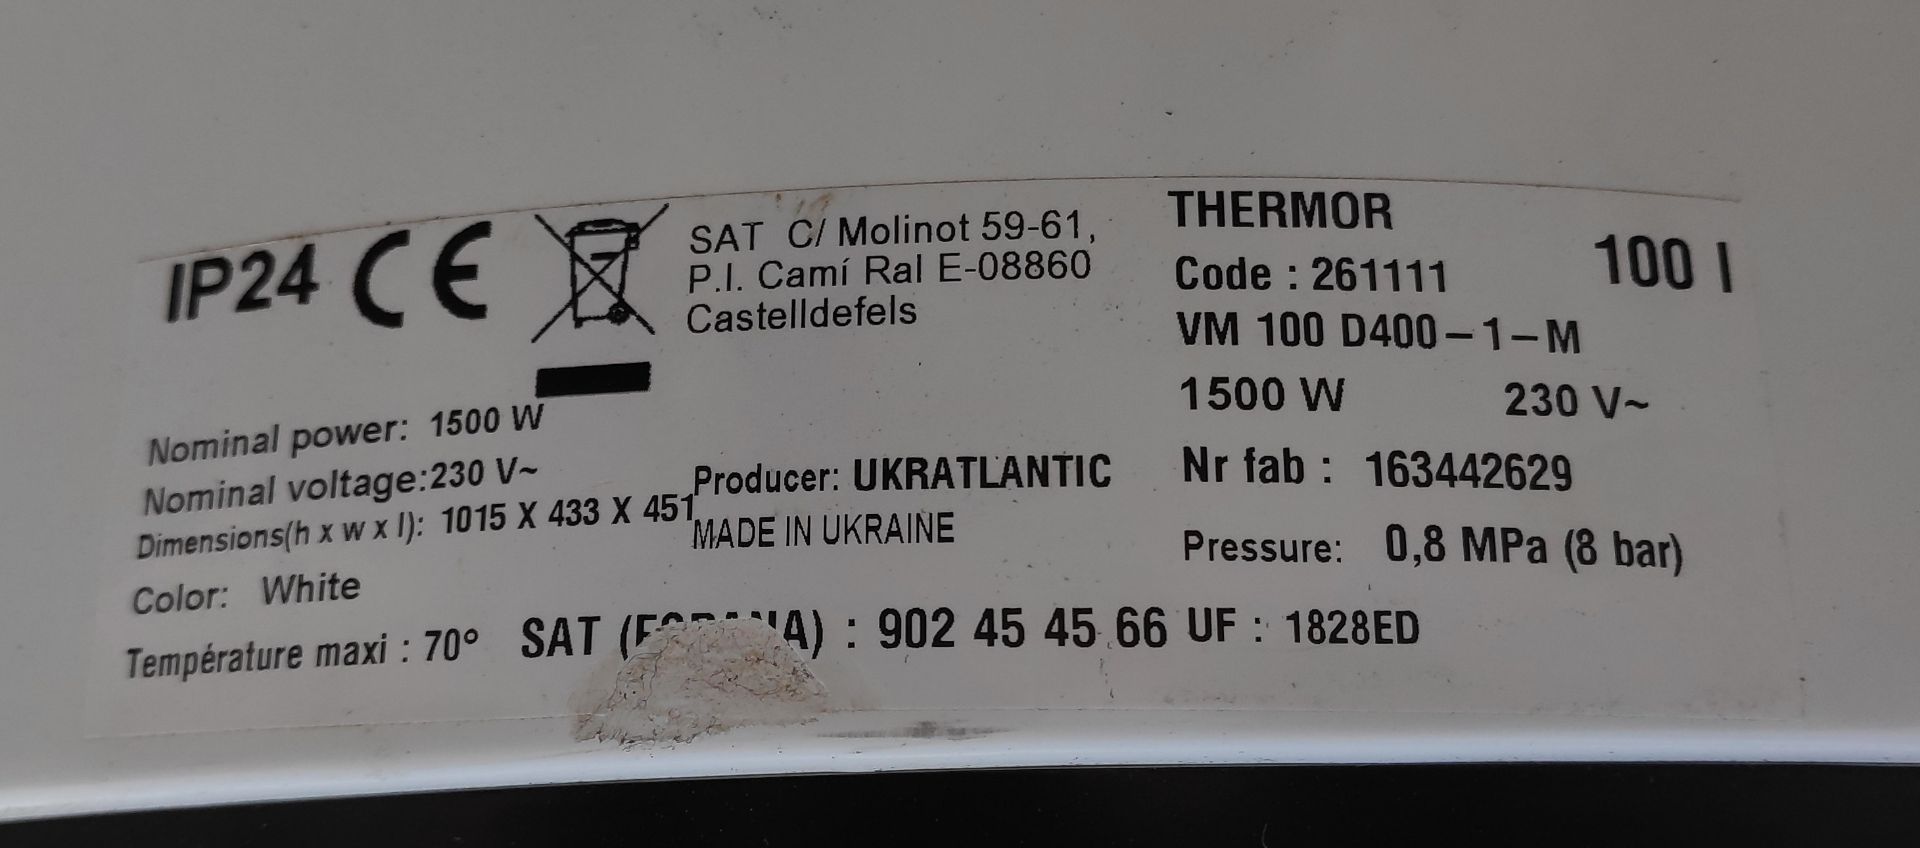 2 x Thermor 261111 100l 1500W Water Cylinders - 1015mm (h) x 433mm (w) x 451mm (d) - JMCS102 - - Image 5 of 10